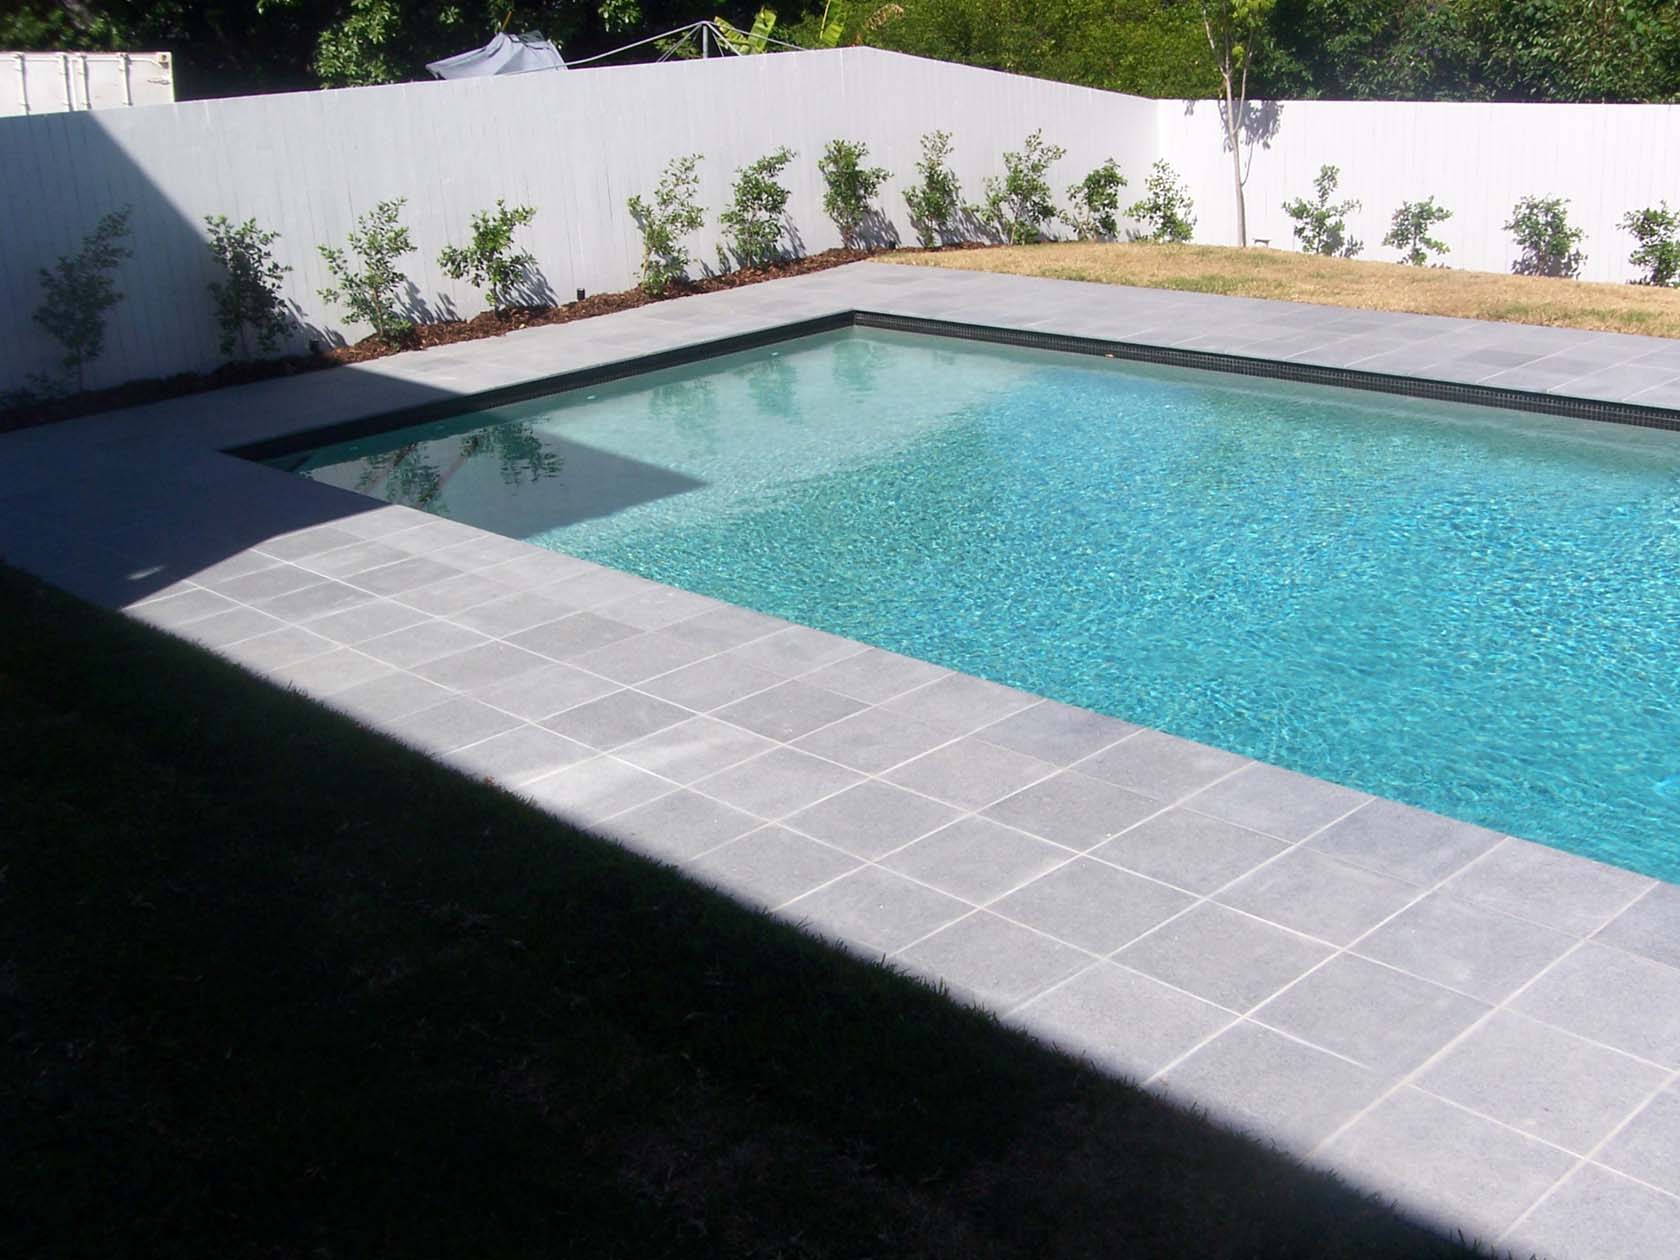 Dark Grey Granite pool coping and surround tiles